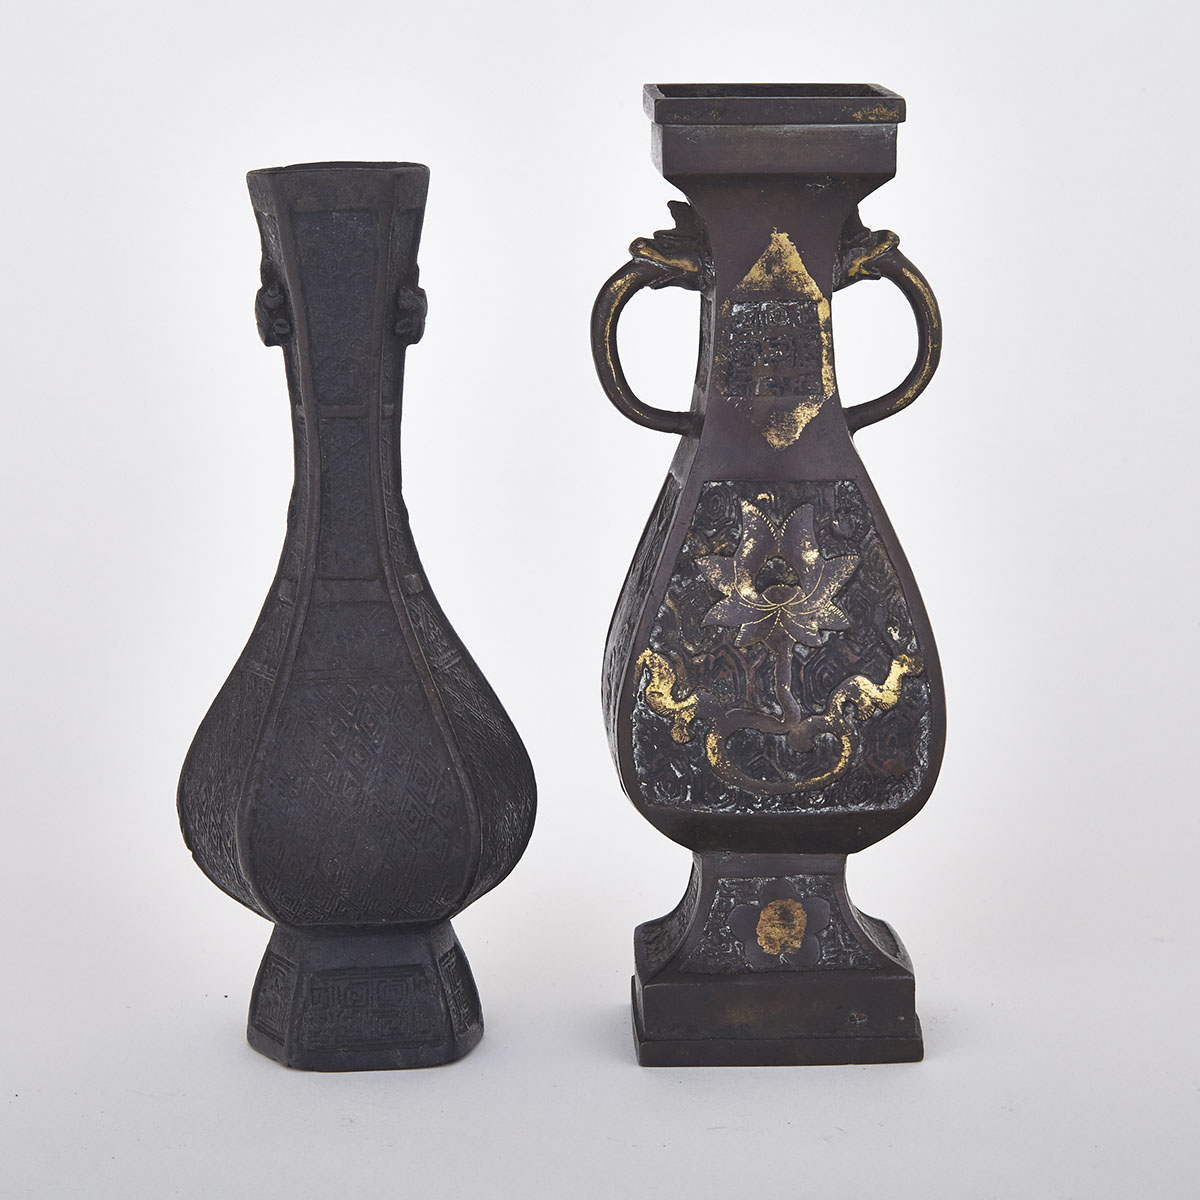 Two Bronze Bottle Vases, 17th Century